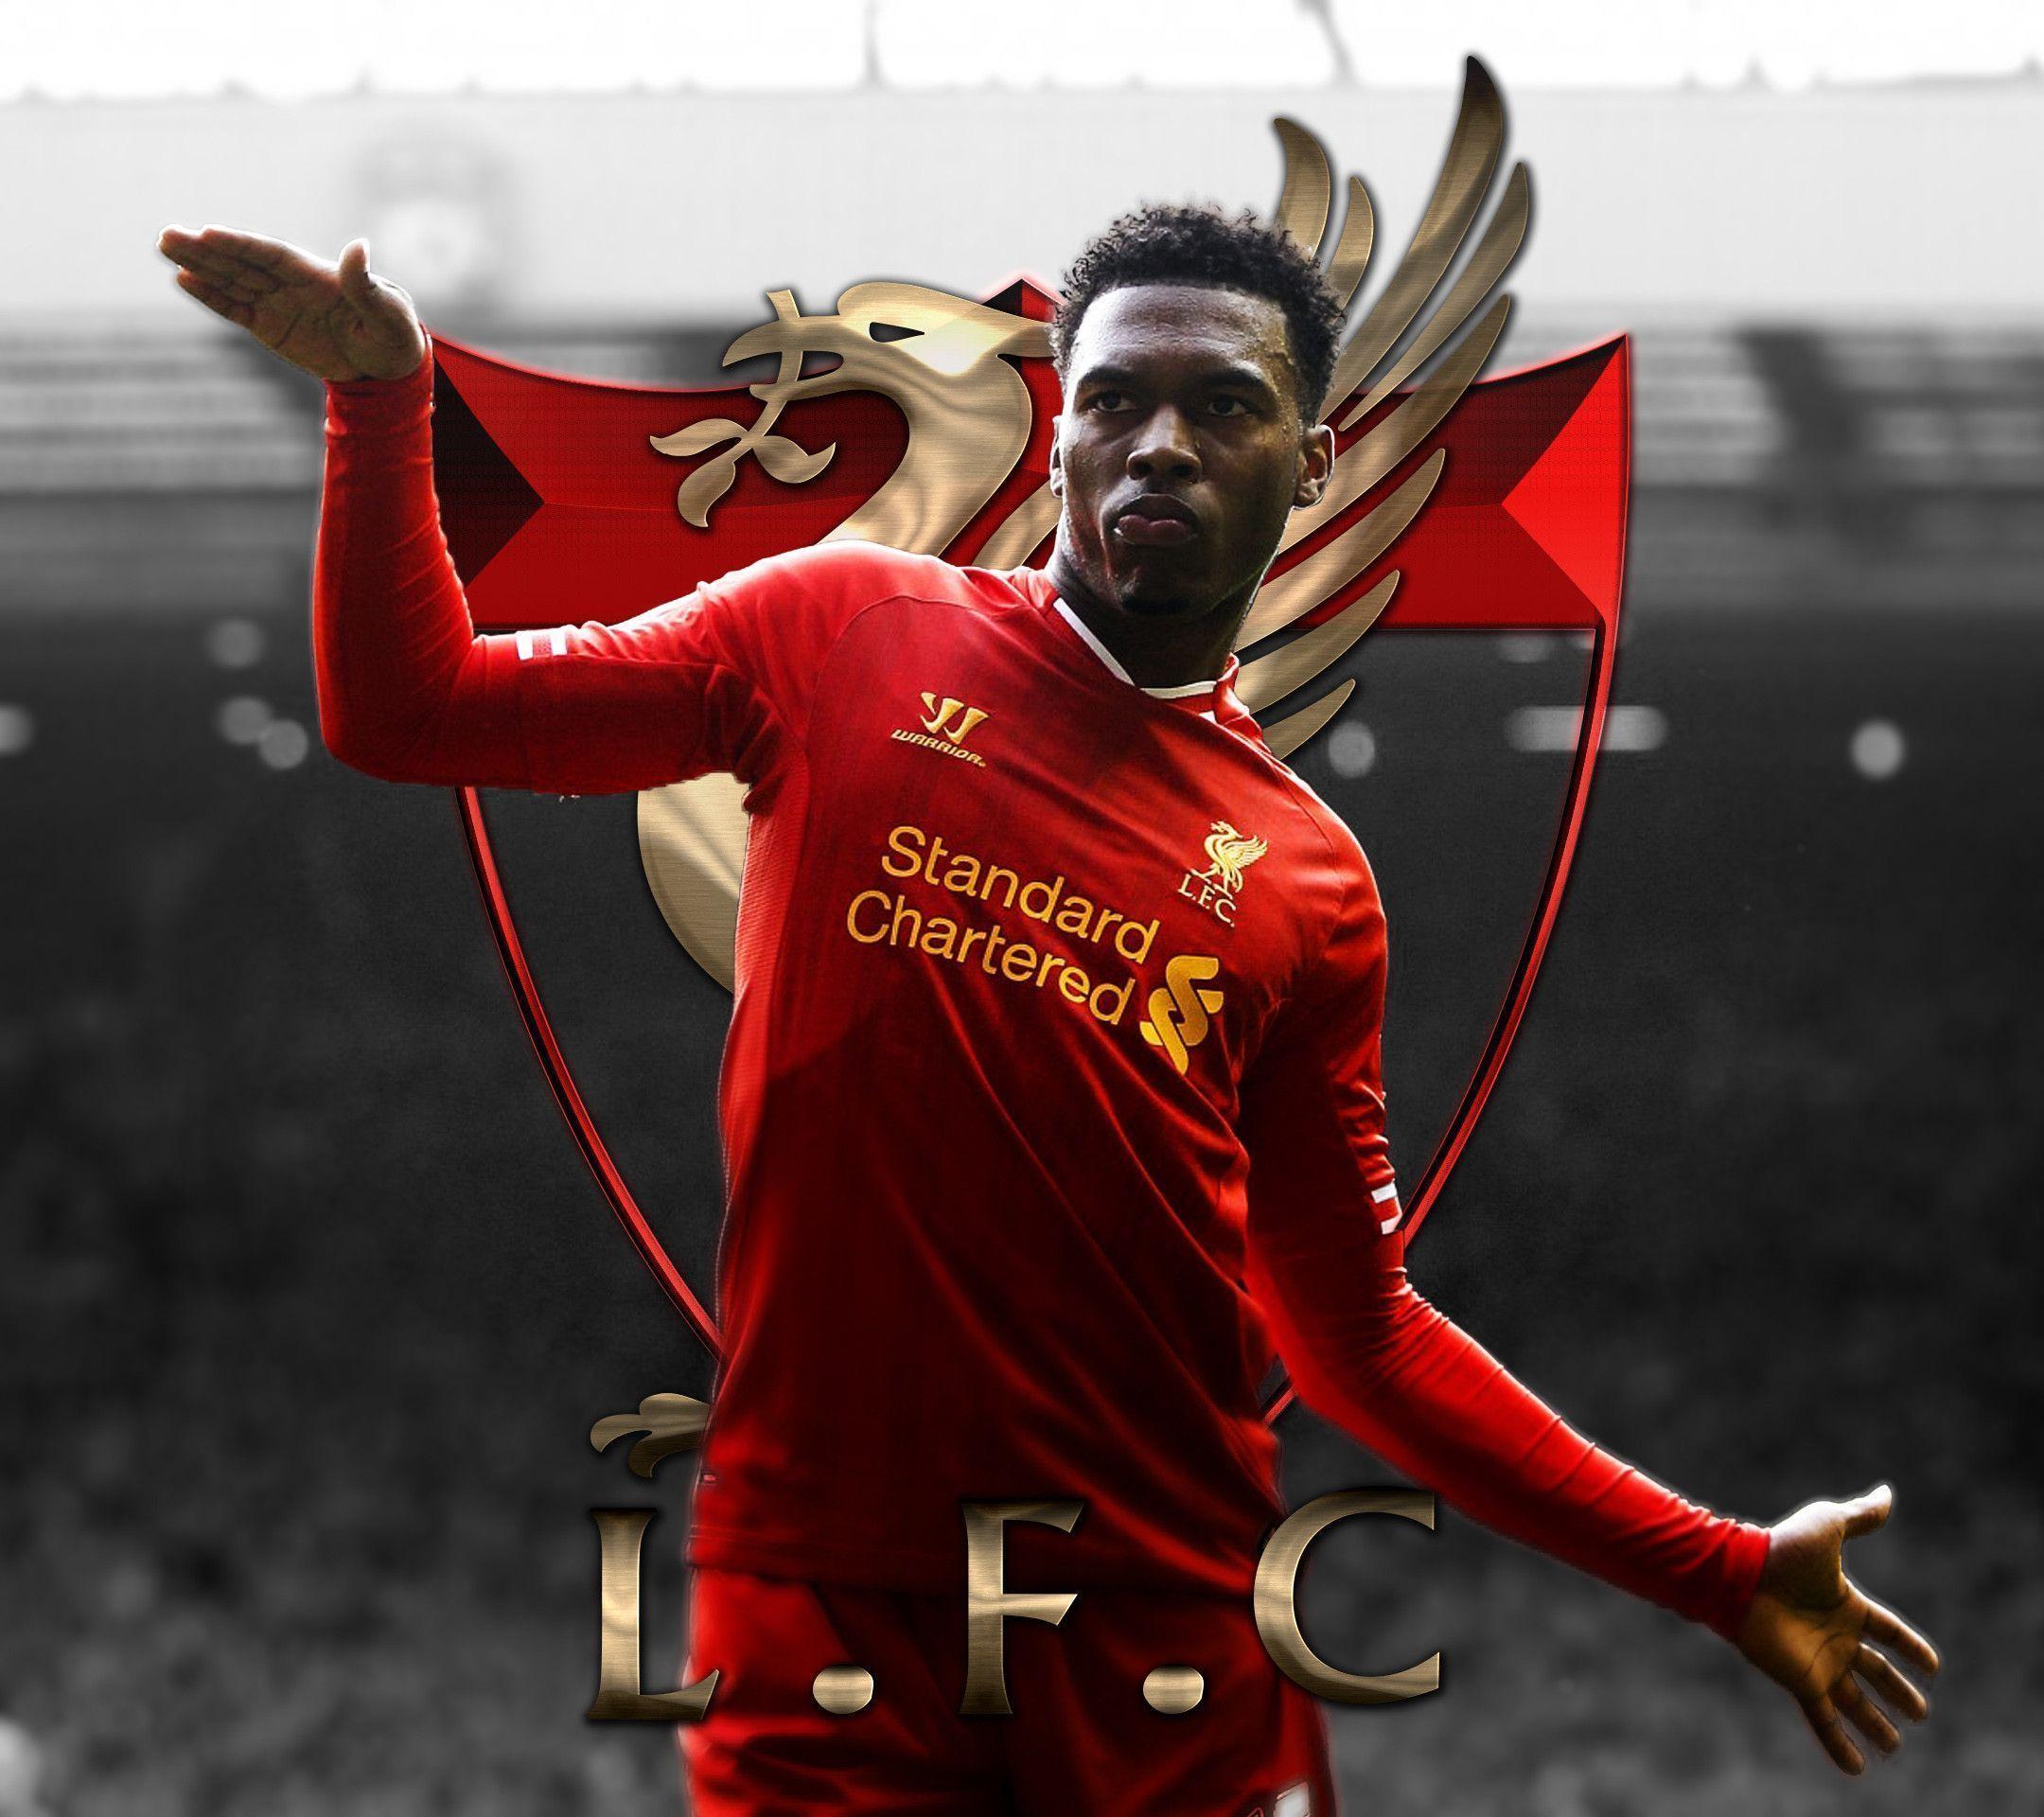 Daniel Sturridge, Liverpool FC player image for desktop wallpaper